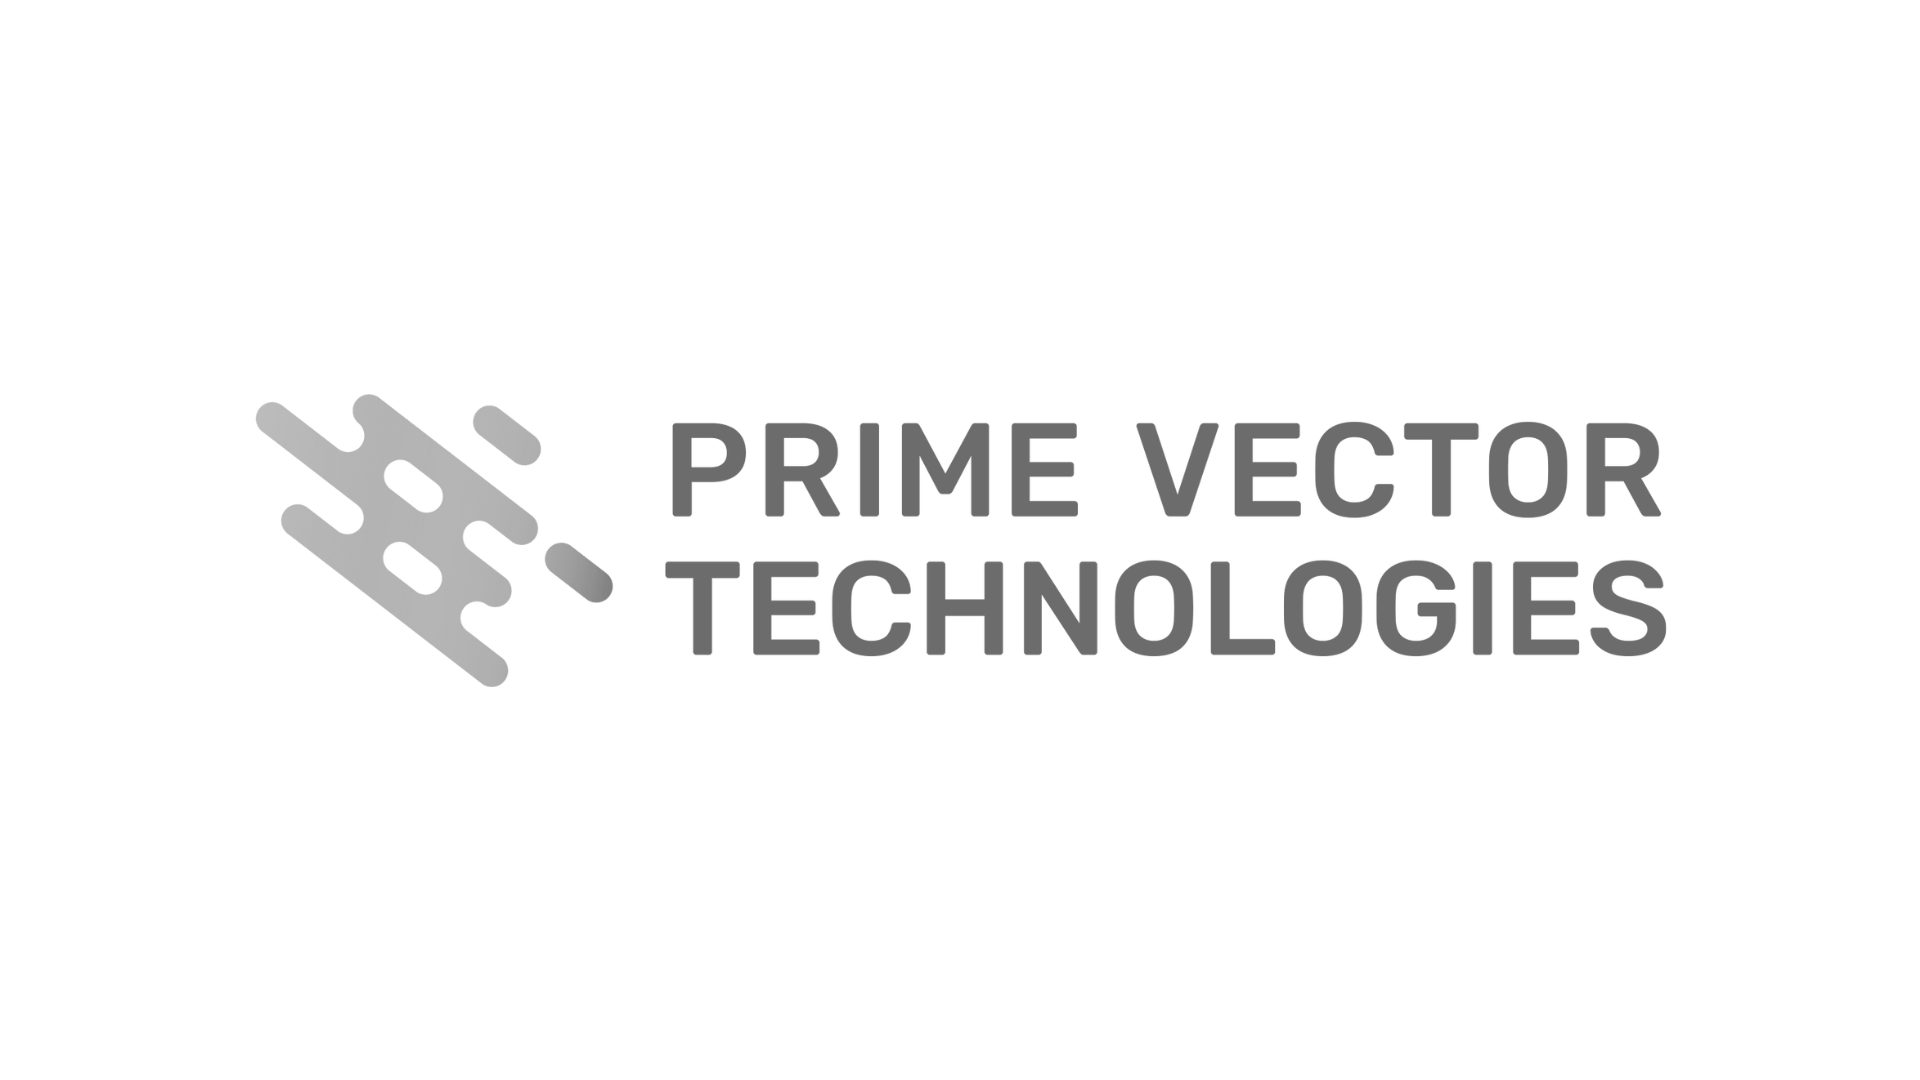 Prime Vector Technologies Logo startup